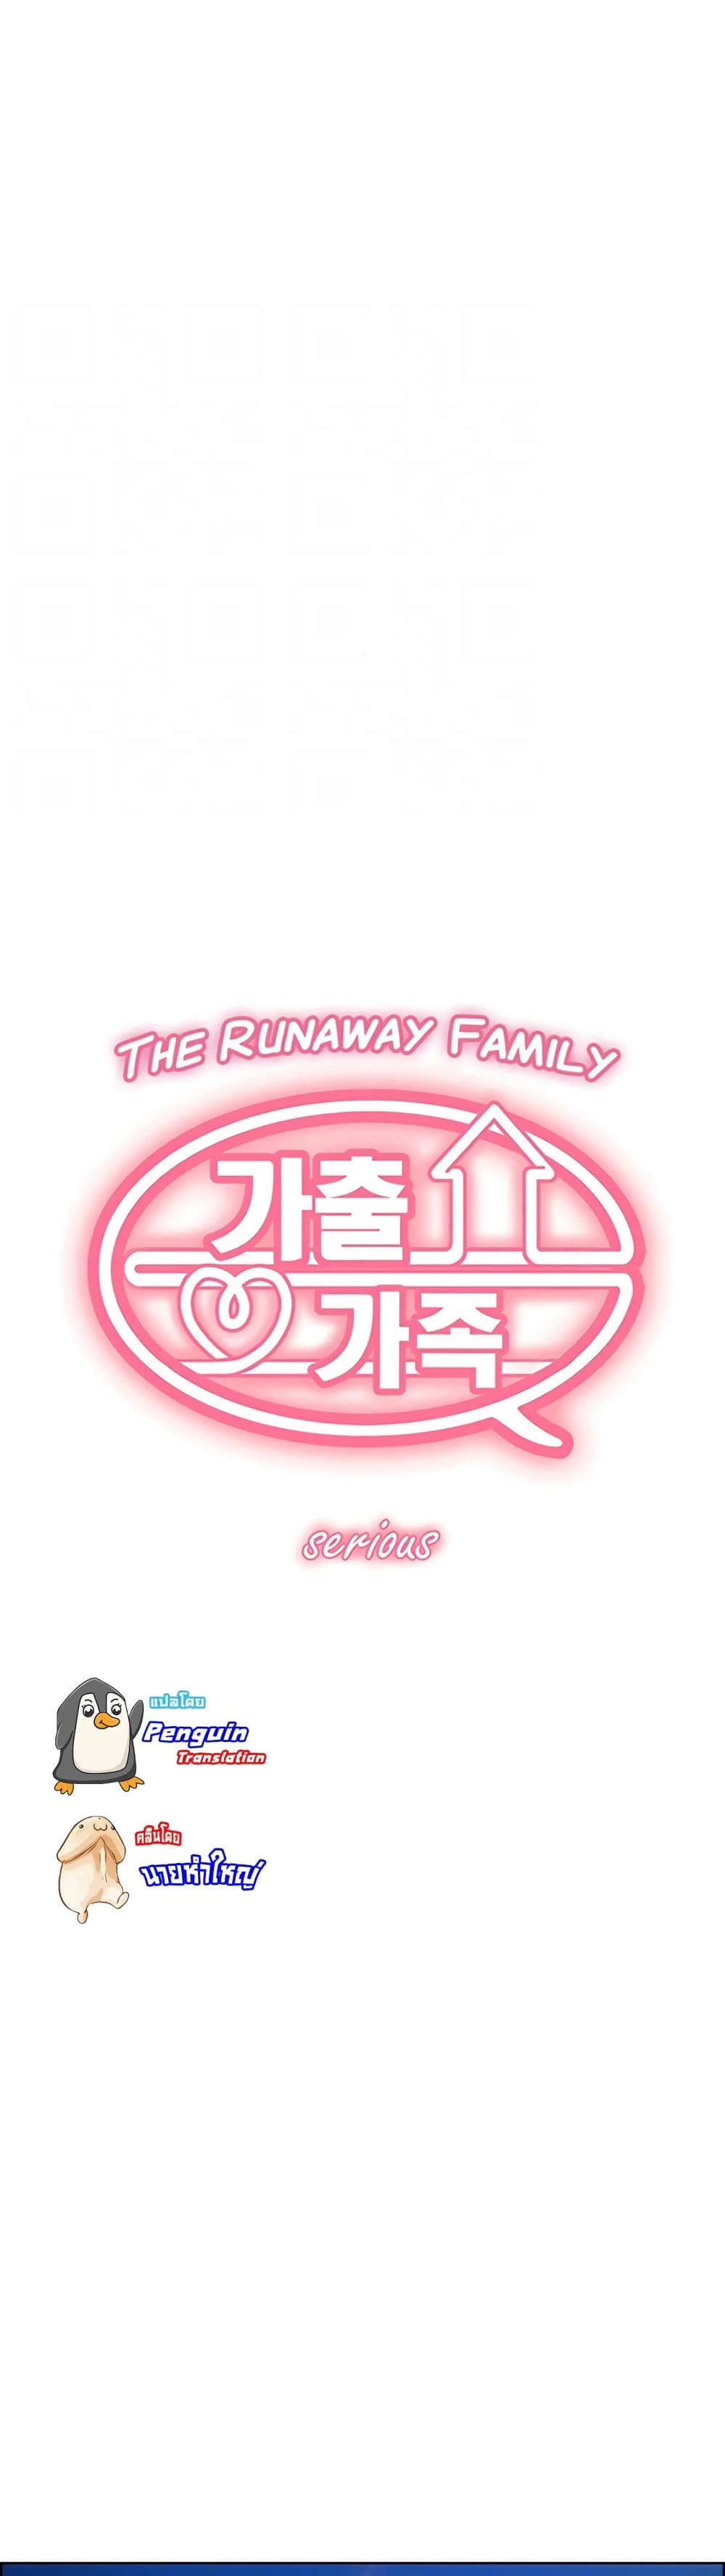 The Runaway Family 15-15